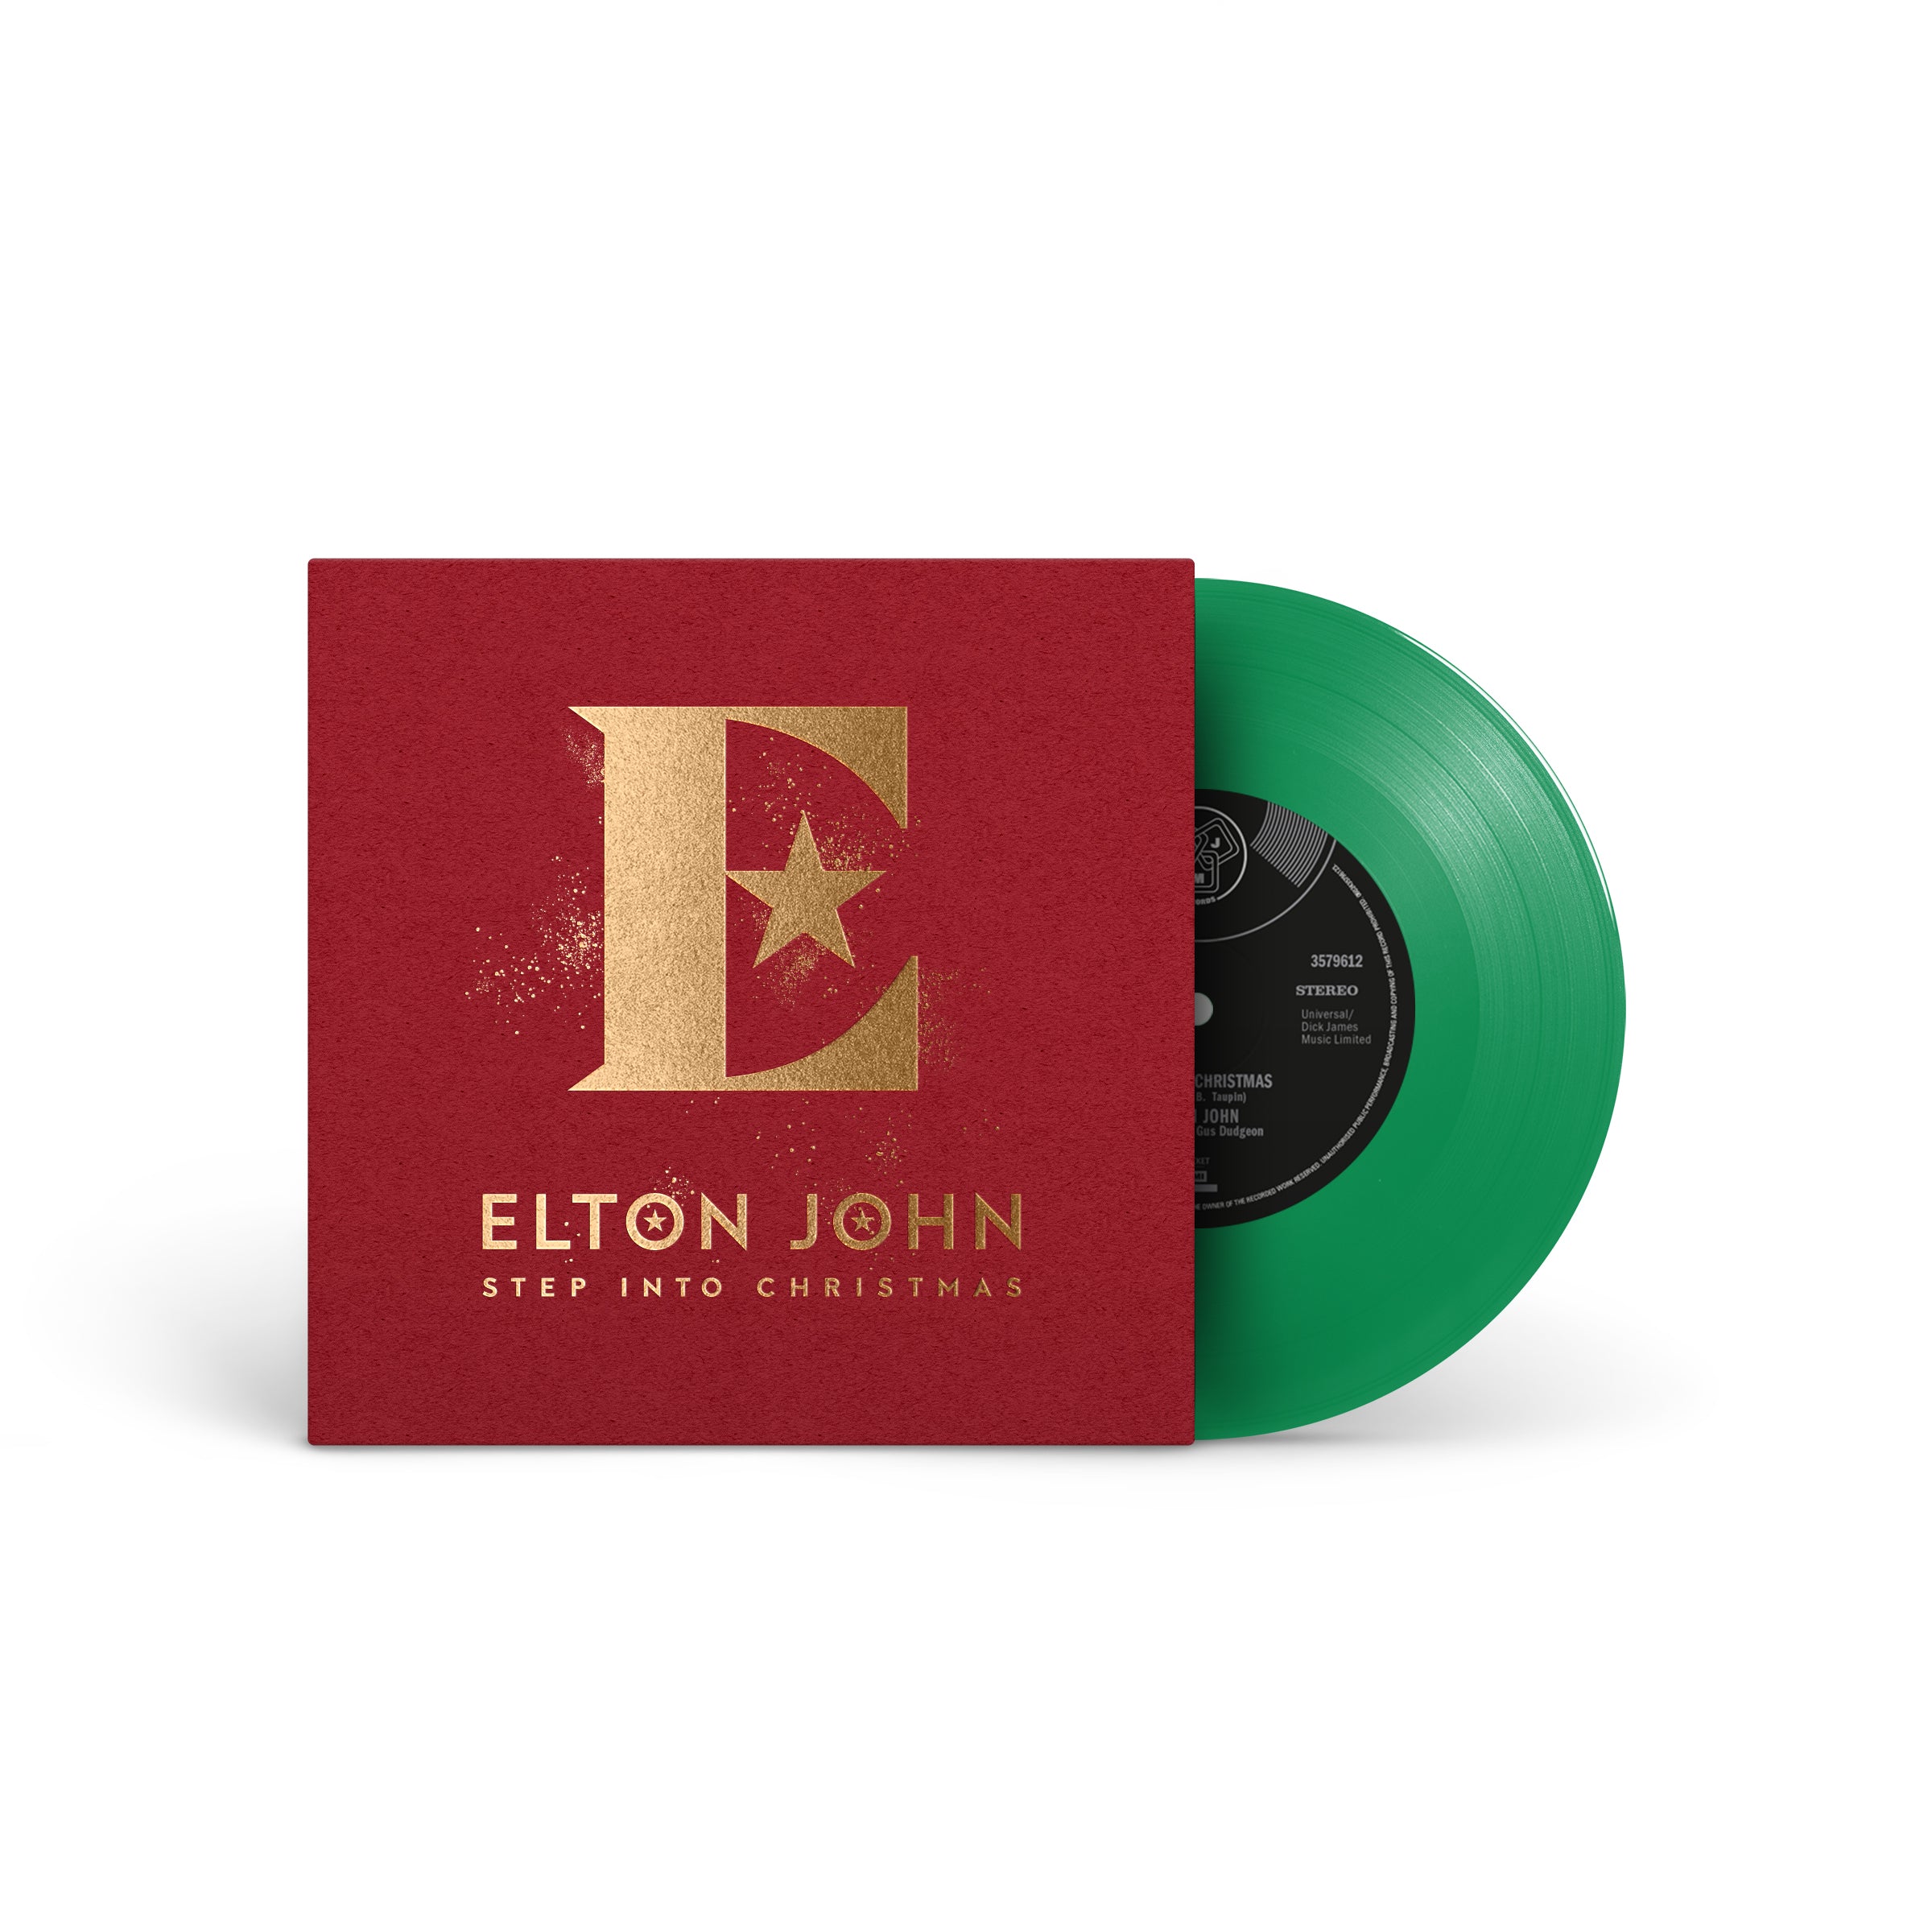 Elton John - Step Into Christmas: Spotify Fans First 7"  Green Vinyl